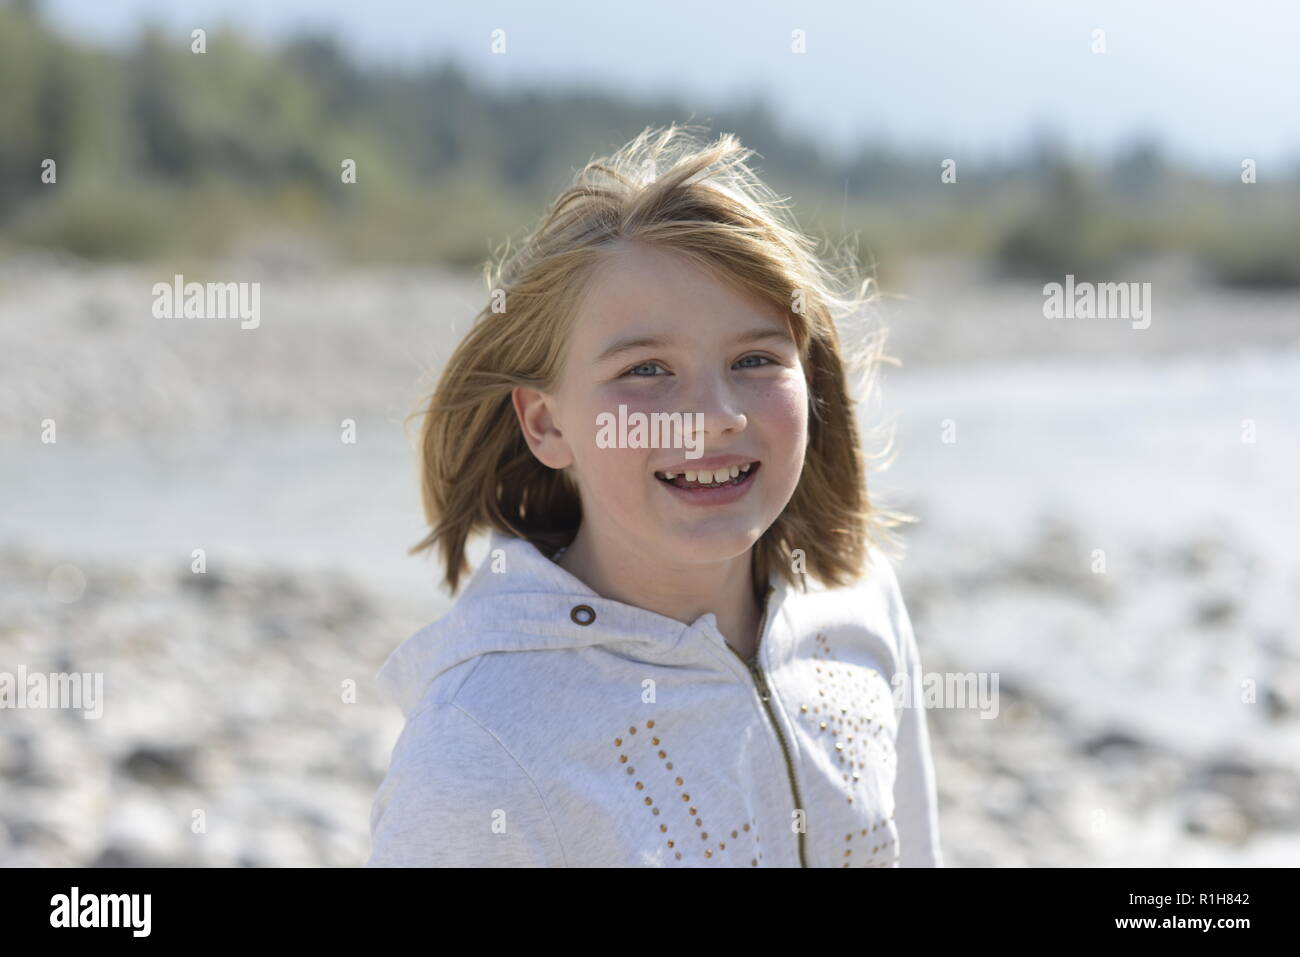 Smiling Girl, Portrait, Bavière, Allemagne Banque D'Images